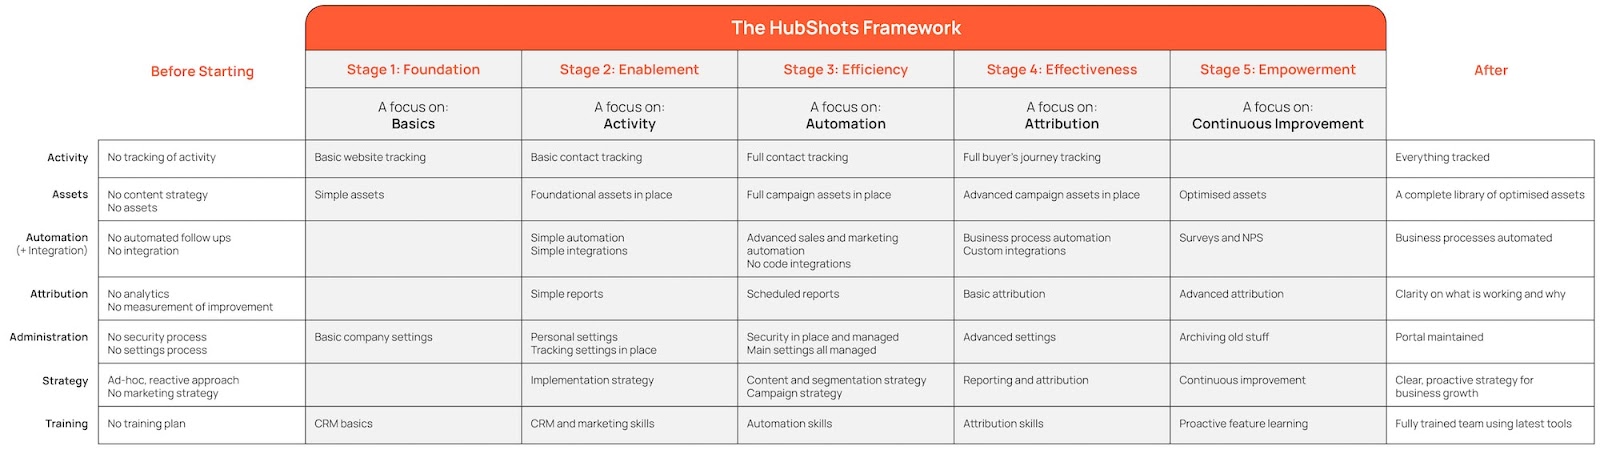 The HubShots Framework